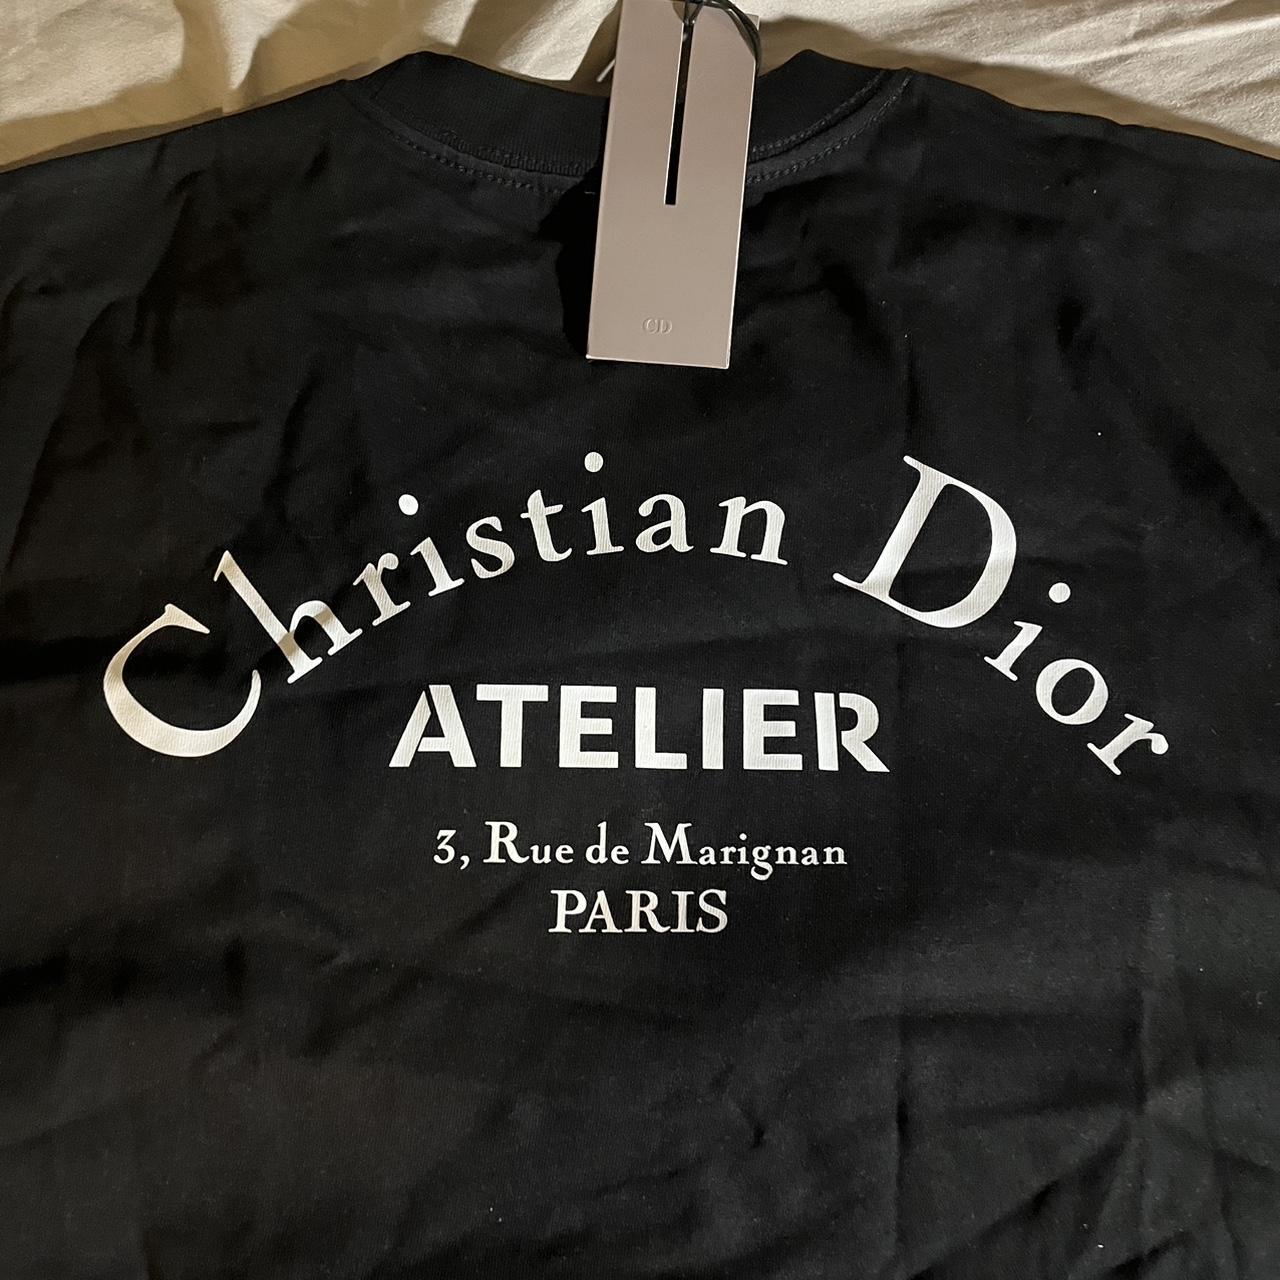 Christian Dior Atelier T Shirt Tops  Designer Exchange  Buy Sell Exchange